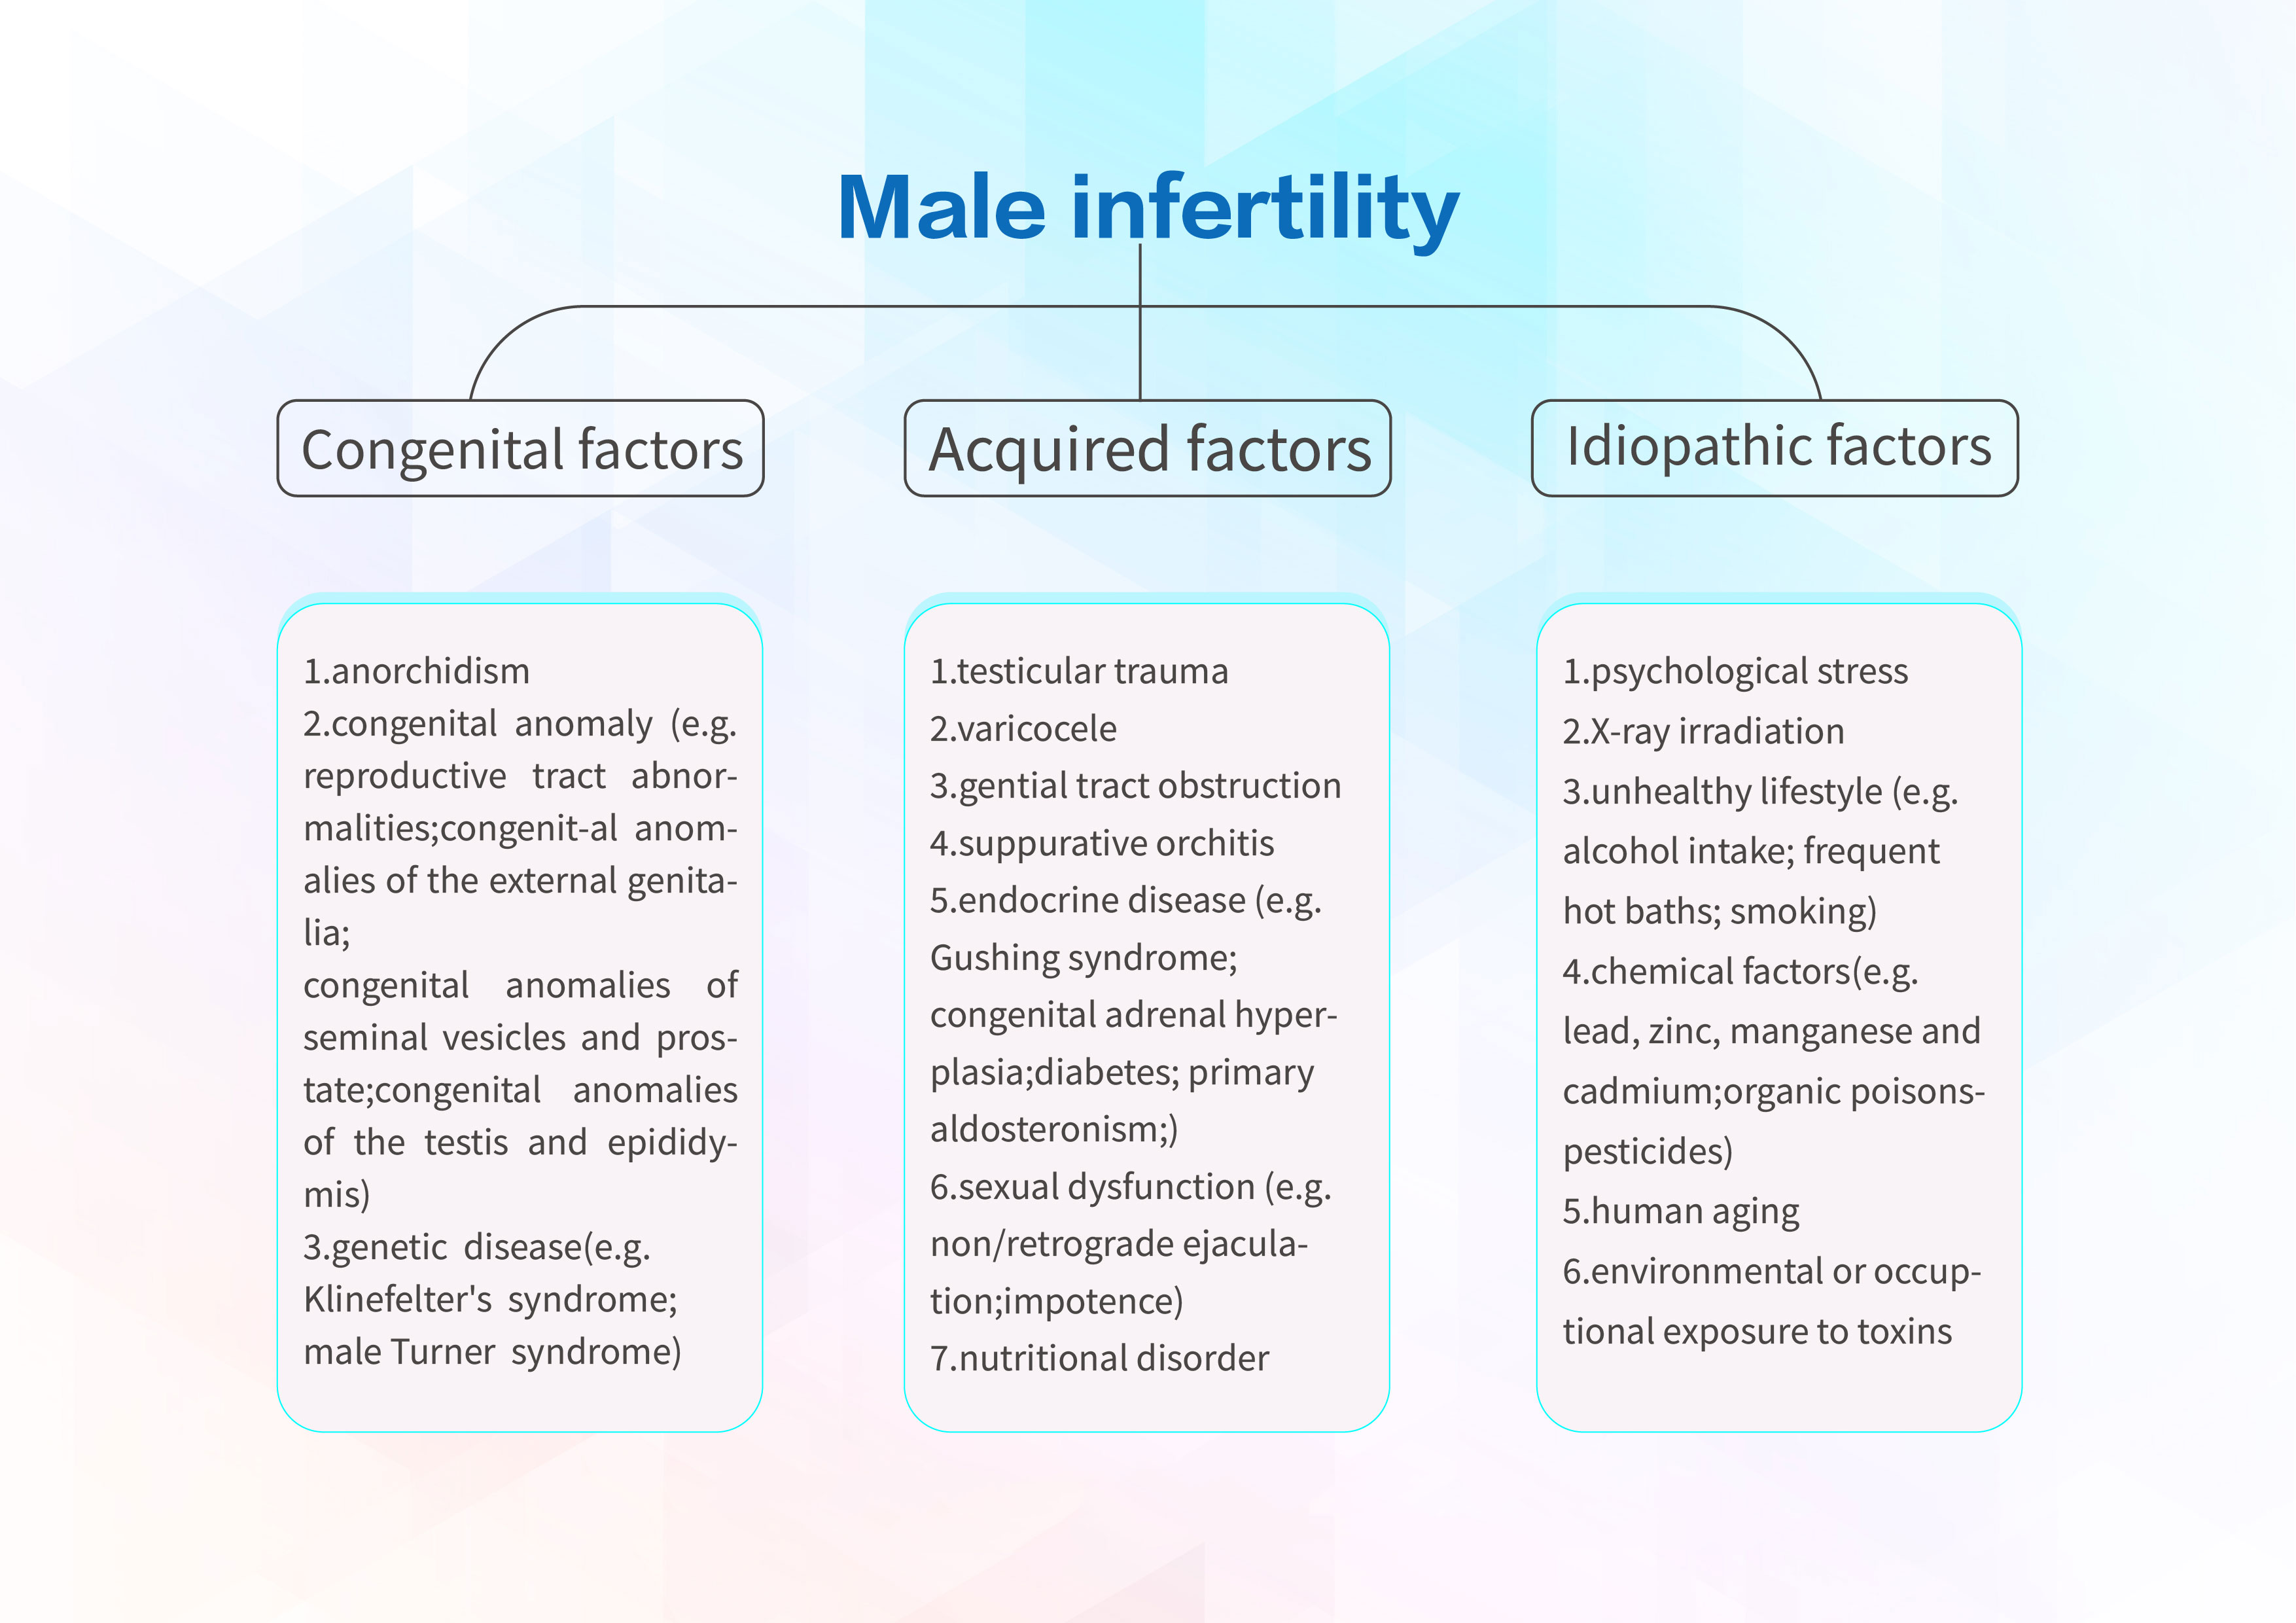 Male Infertility Statistics